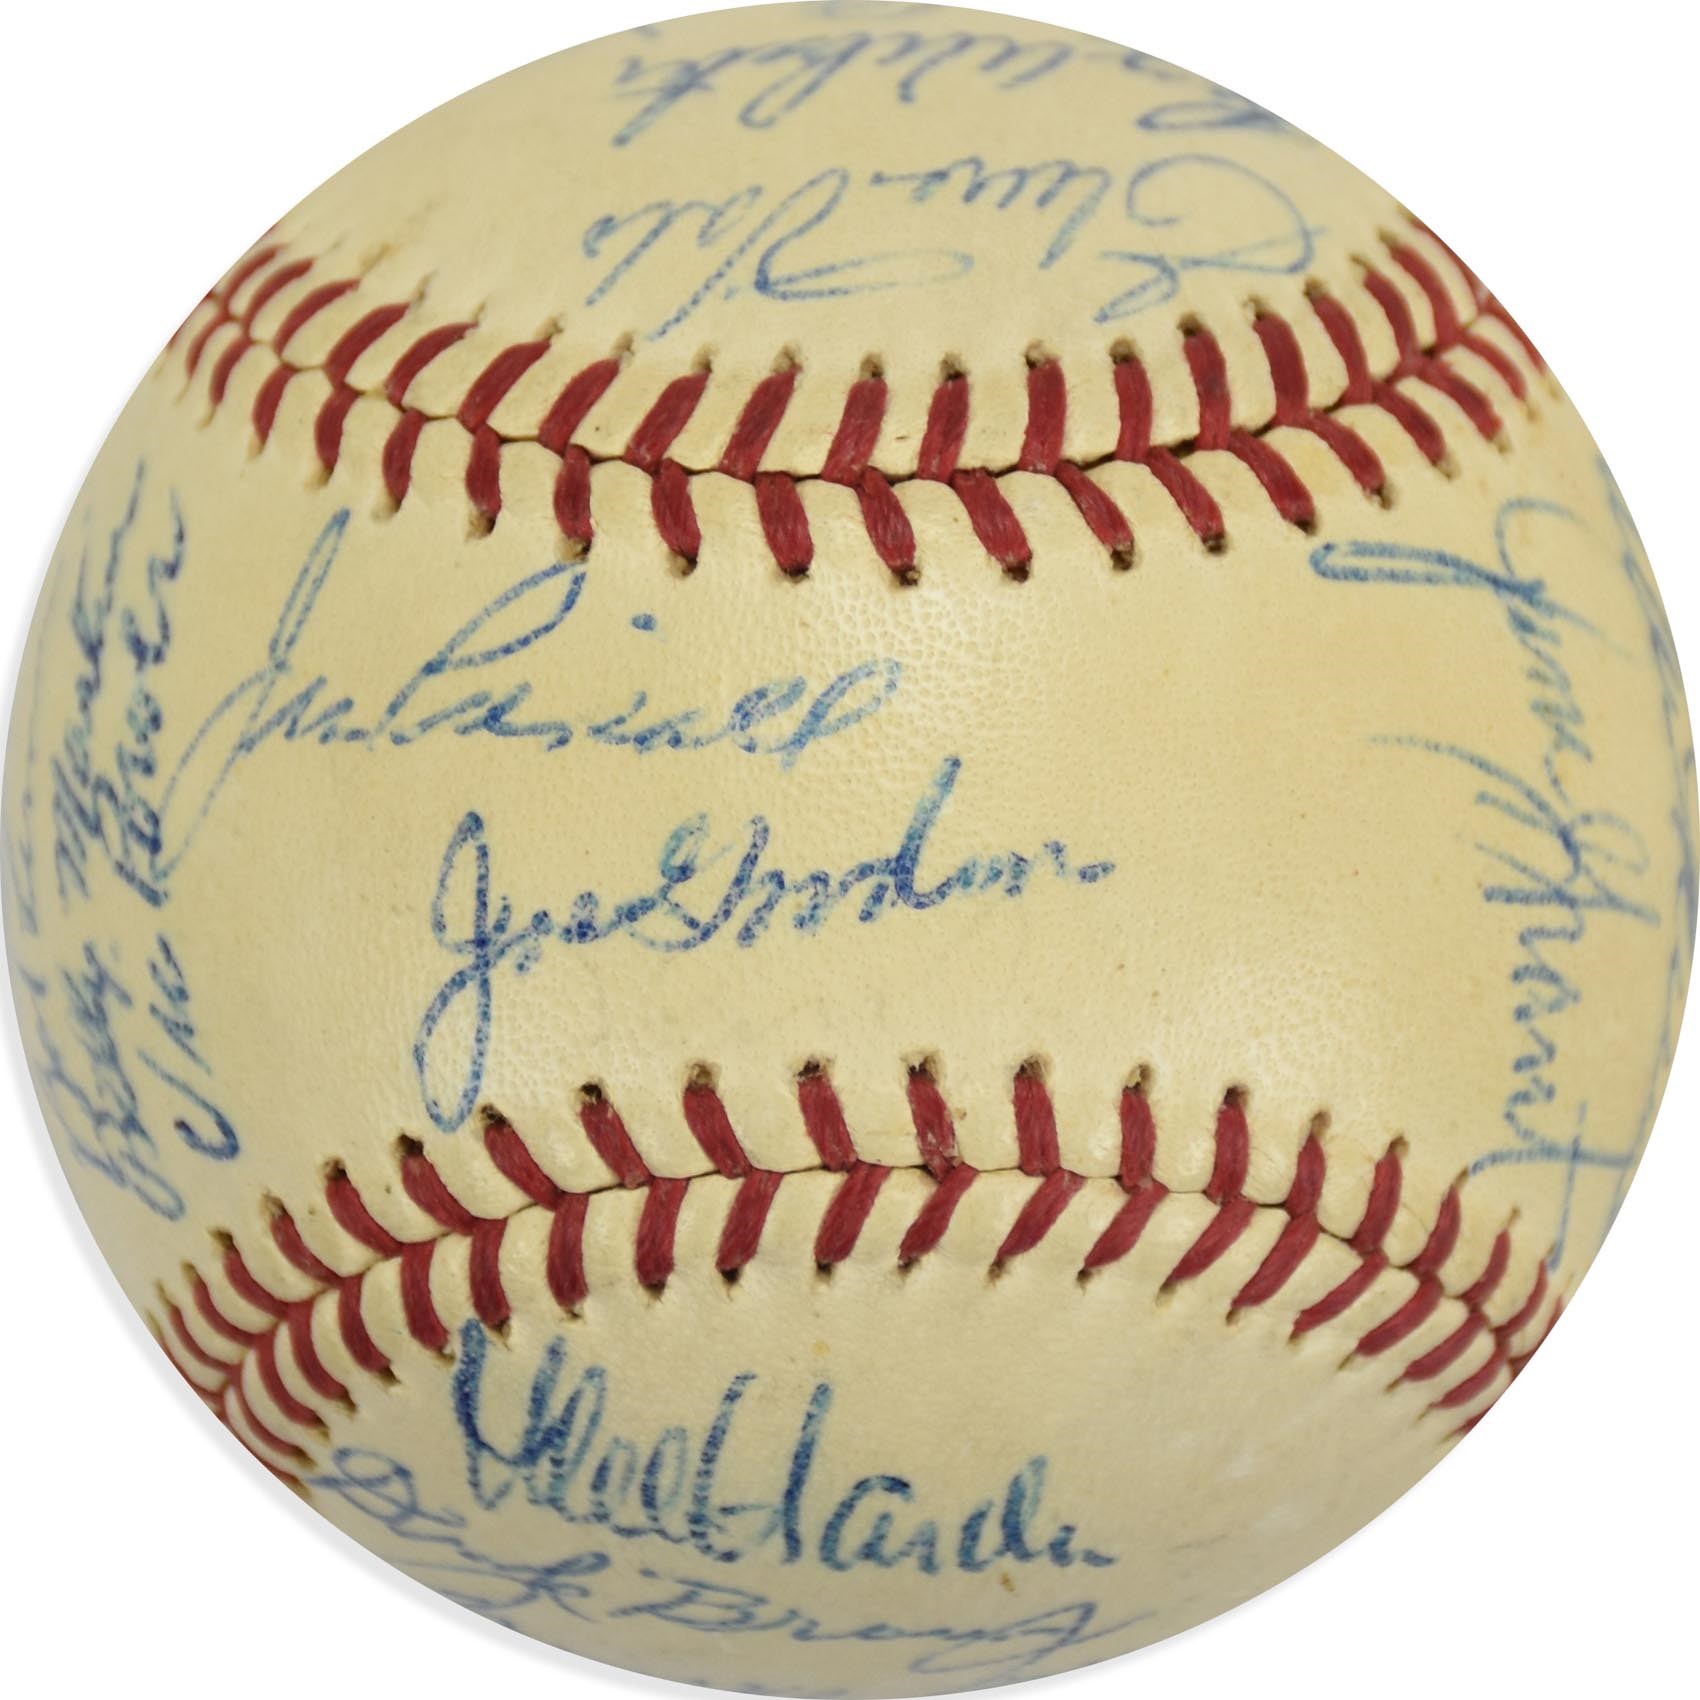 Baseball Autographs - 1959 Cleveland Indians Team Signed Baseball with Lemon and Billy Martin (PSA)